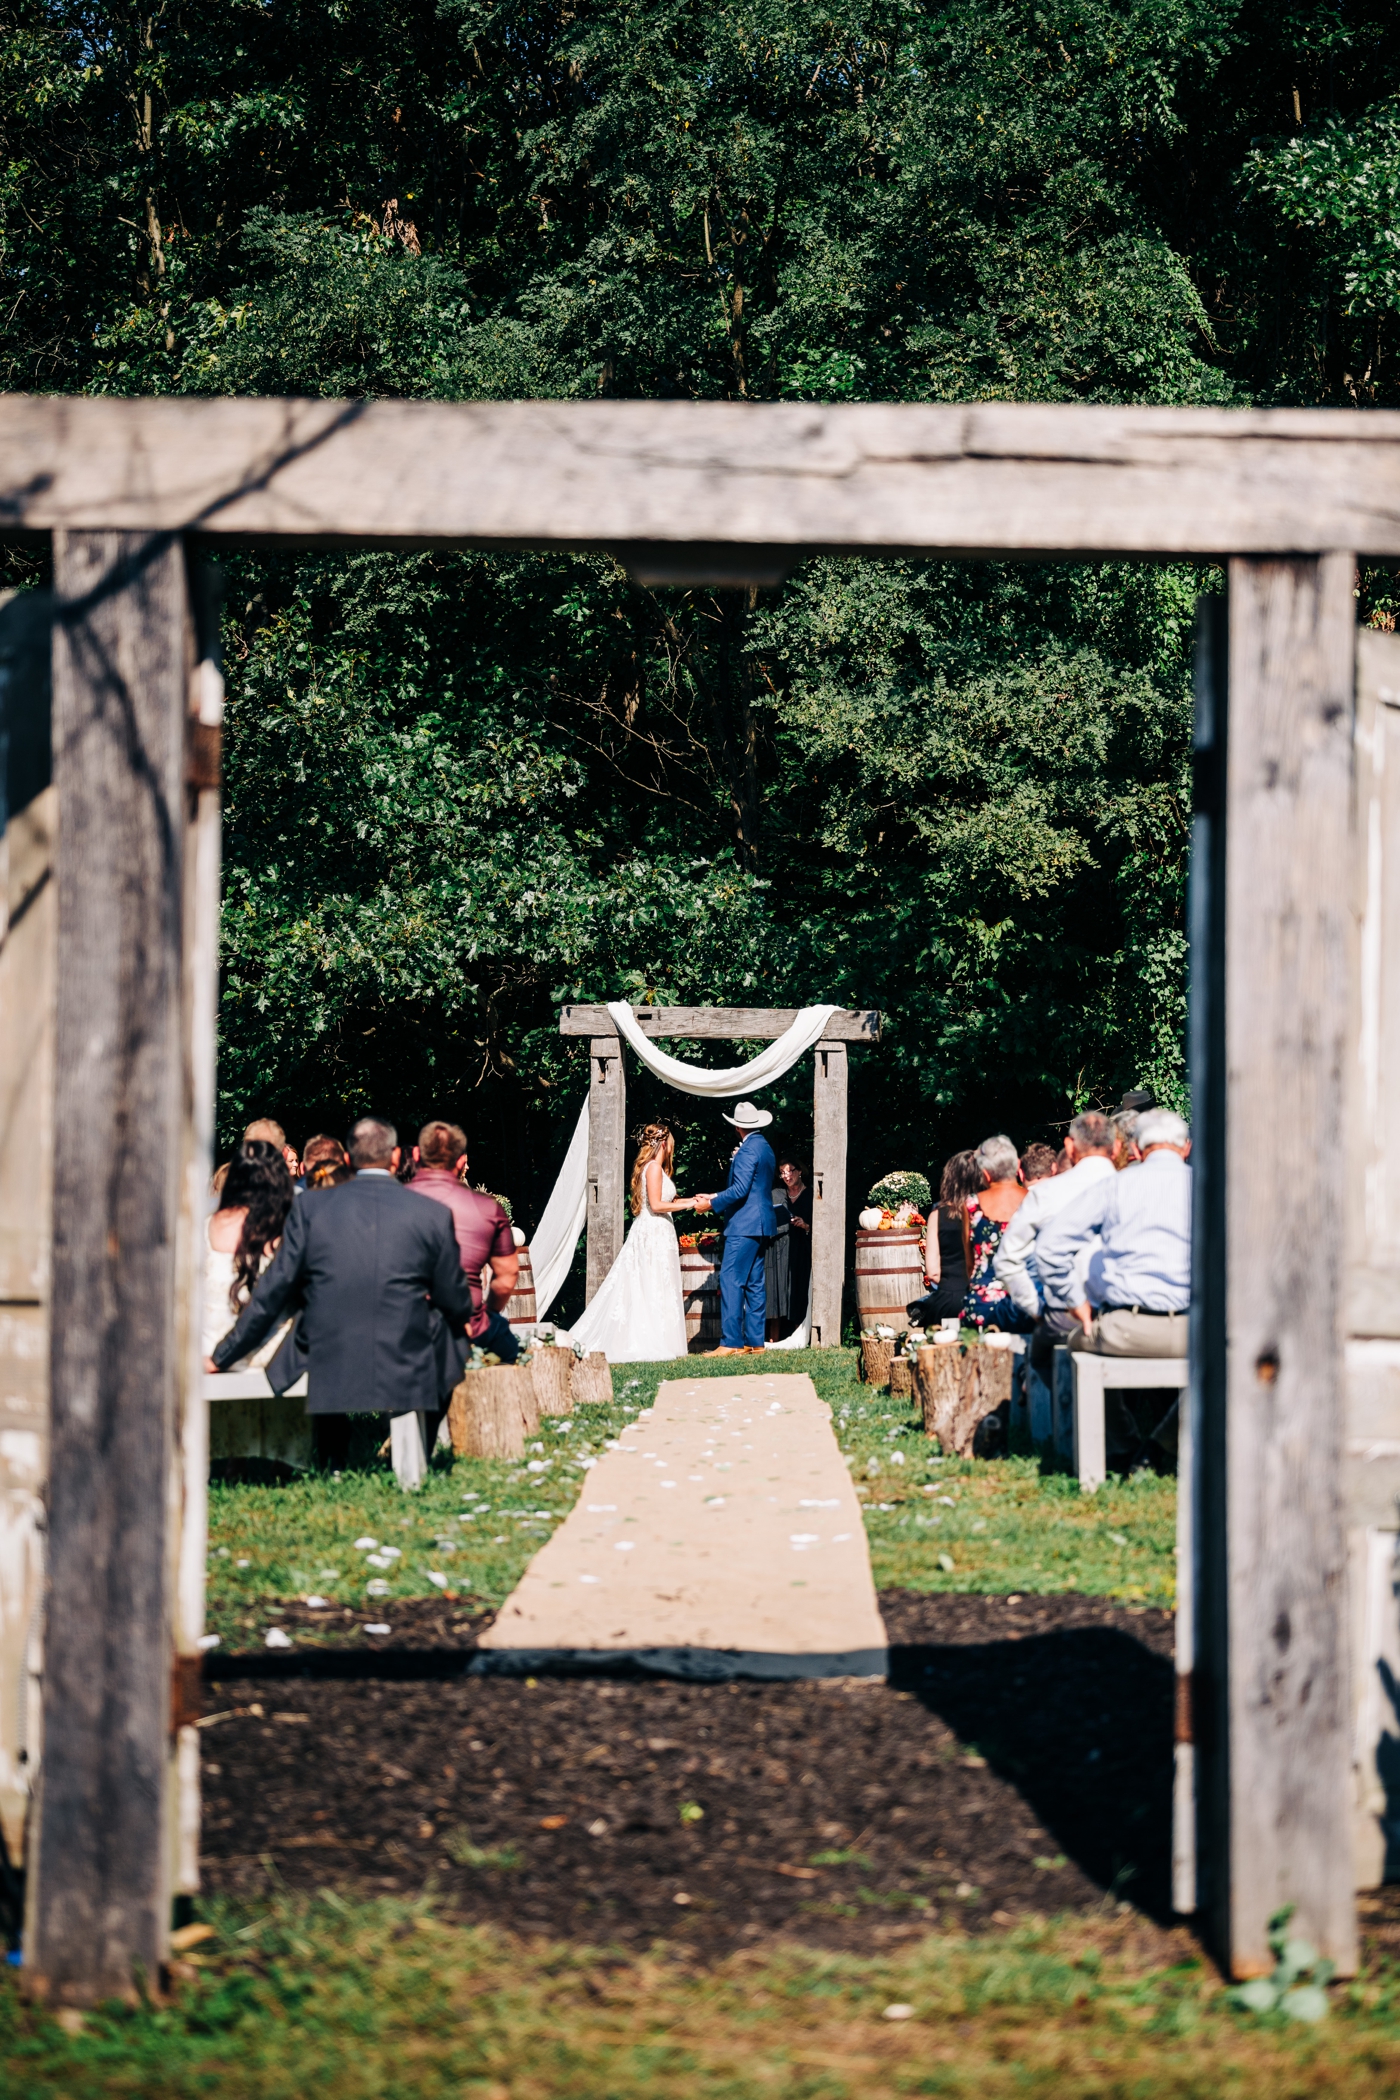 Rustic wedding ceremony at The Barn at Timber Ridge